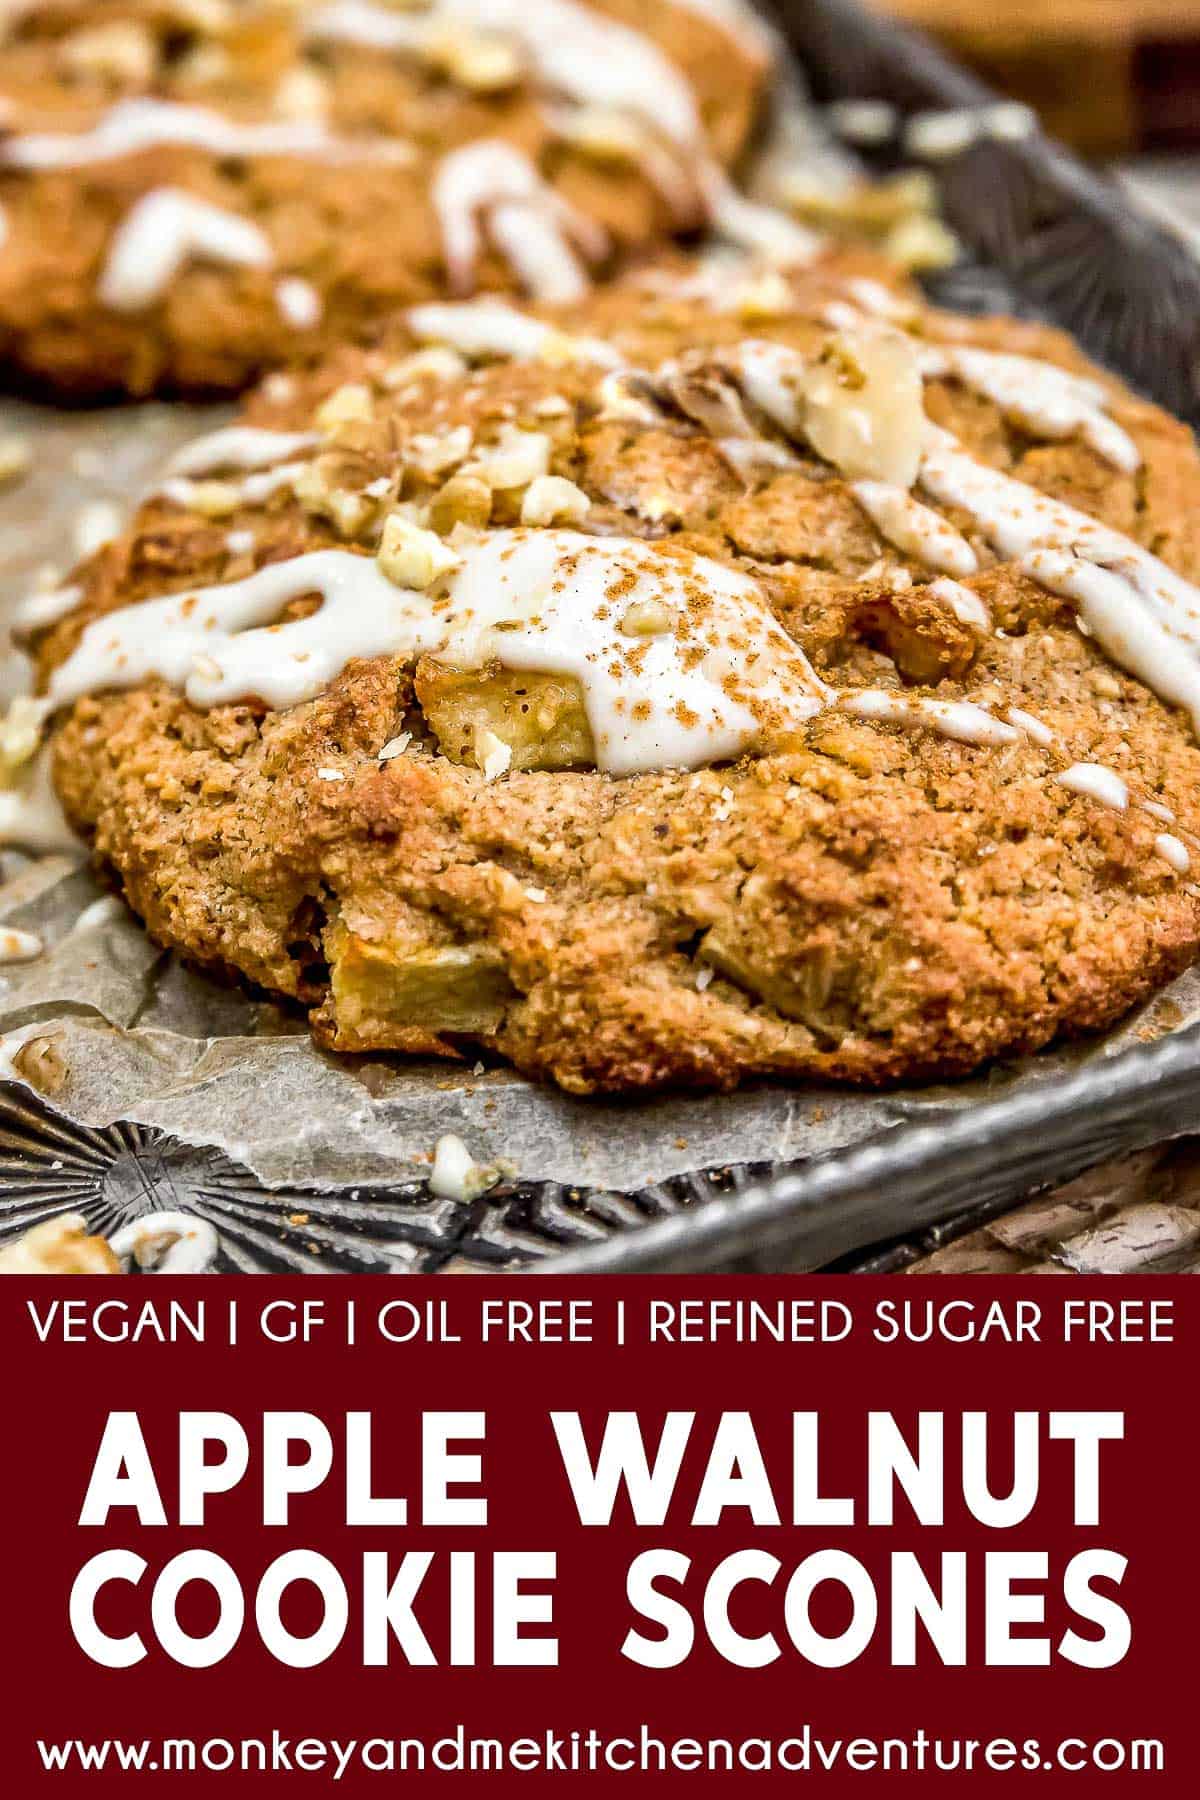 Apple Walnut Cookie Scones with text description